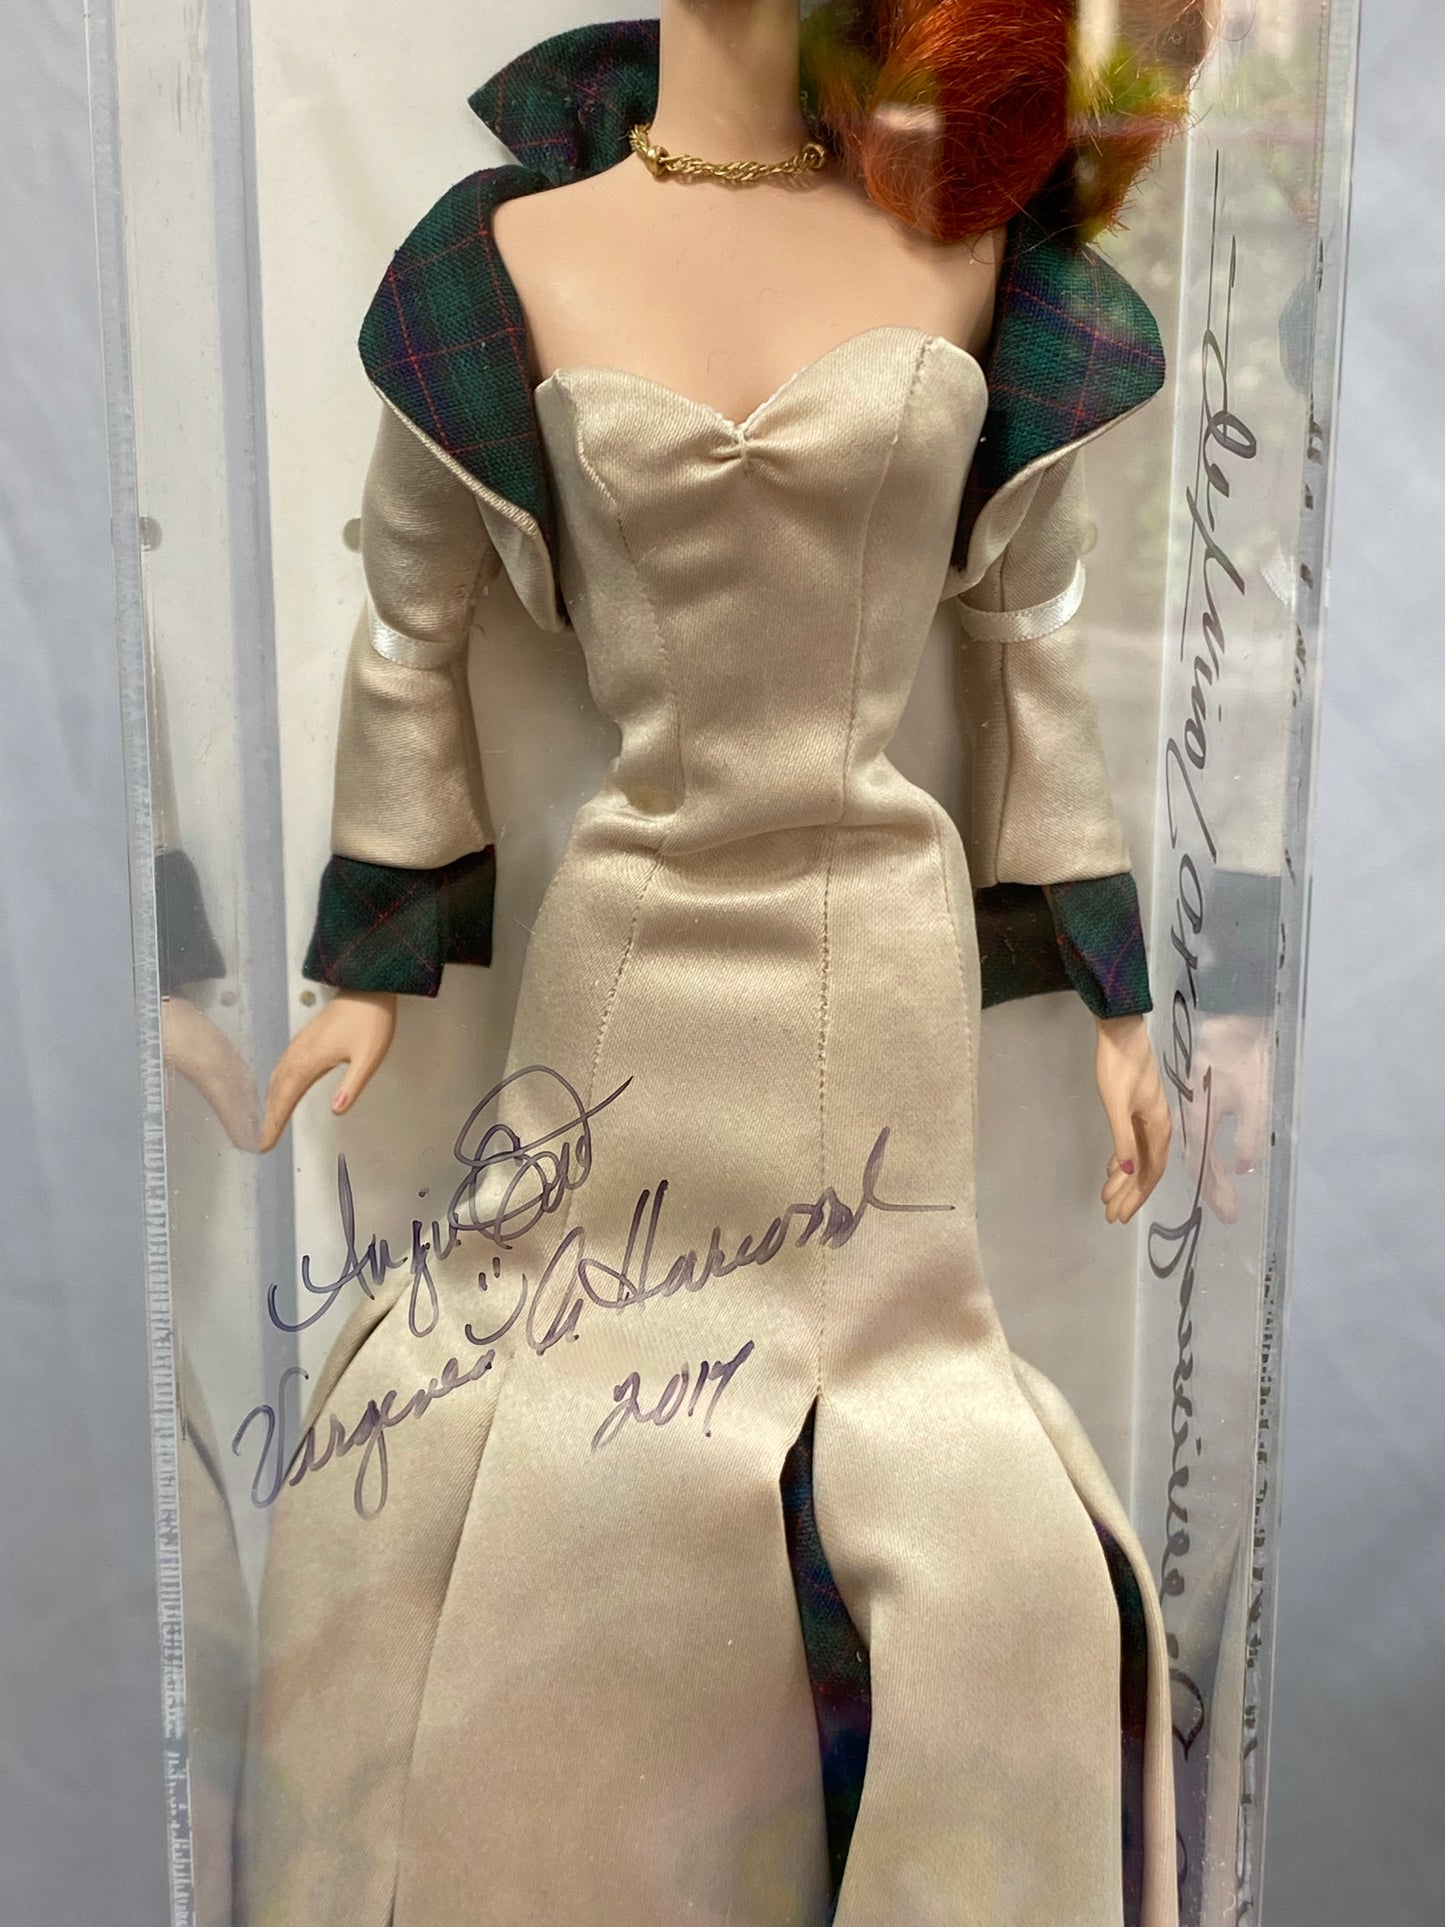 Grant A Wish Convention Fashion Model Silkstone Barbie Doll GAW Scottish Highlands Mattel 2017